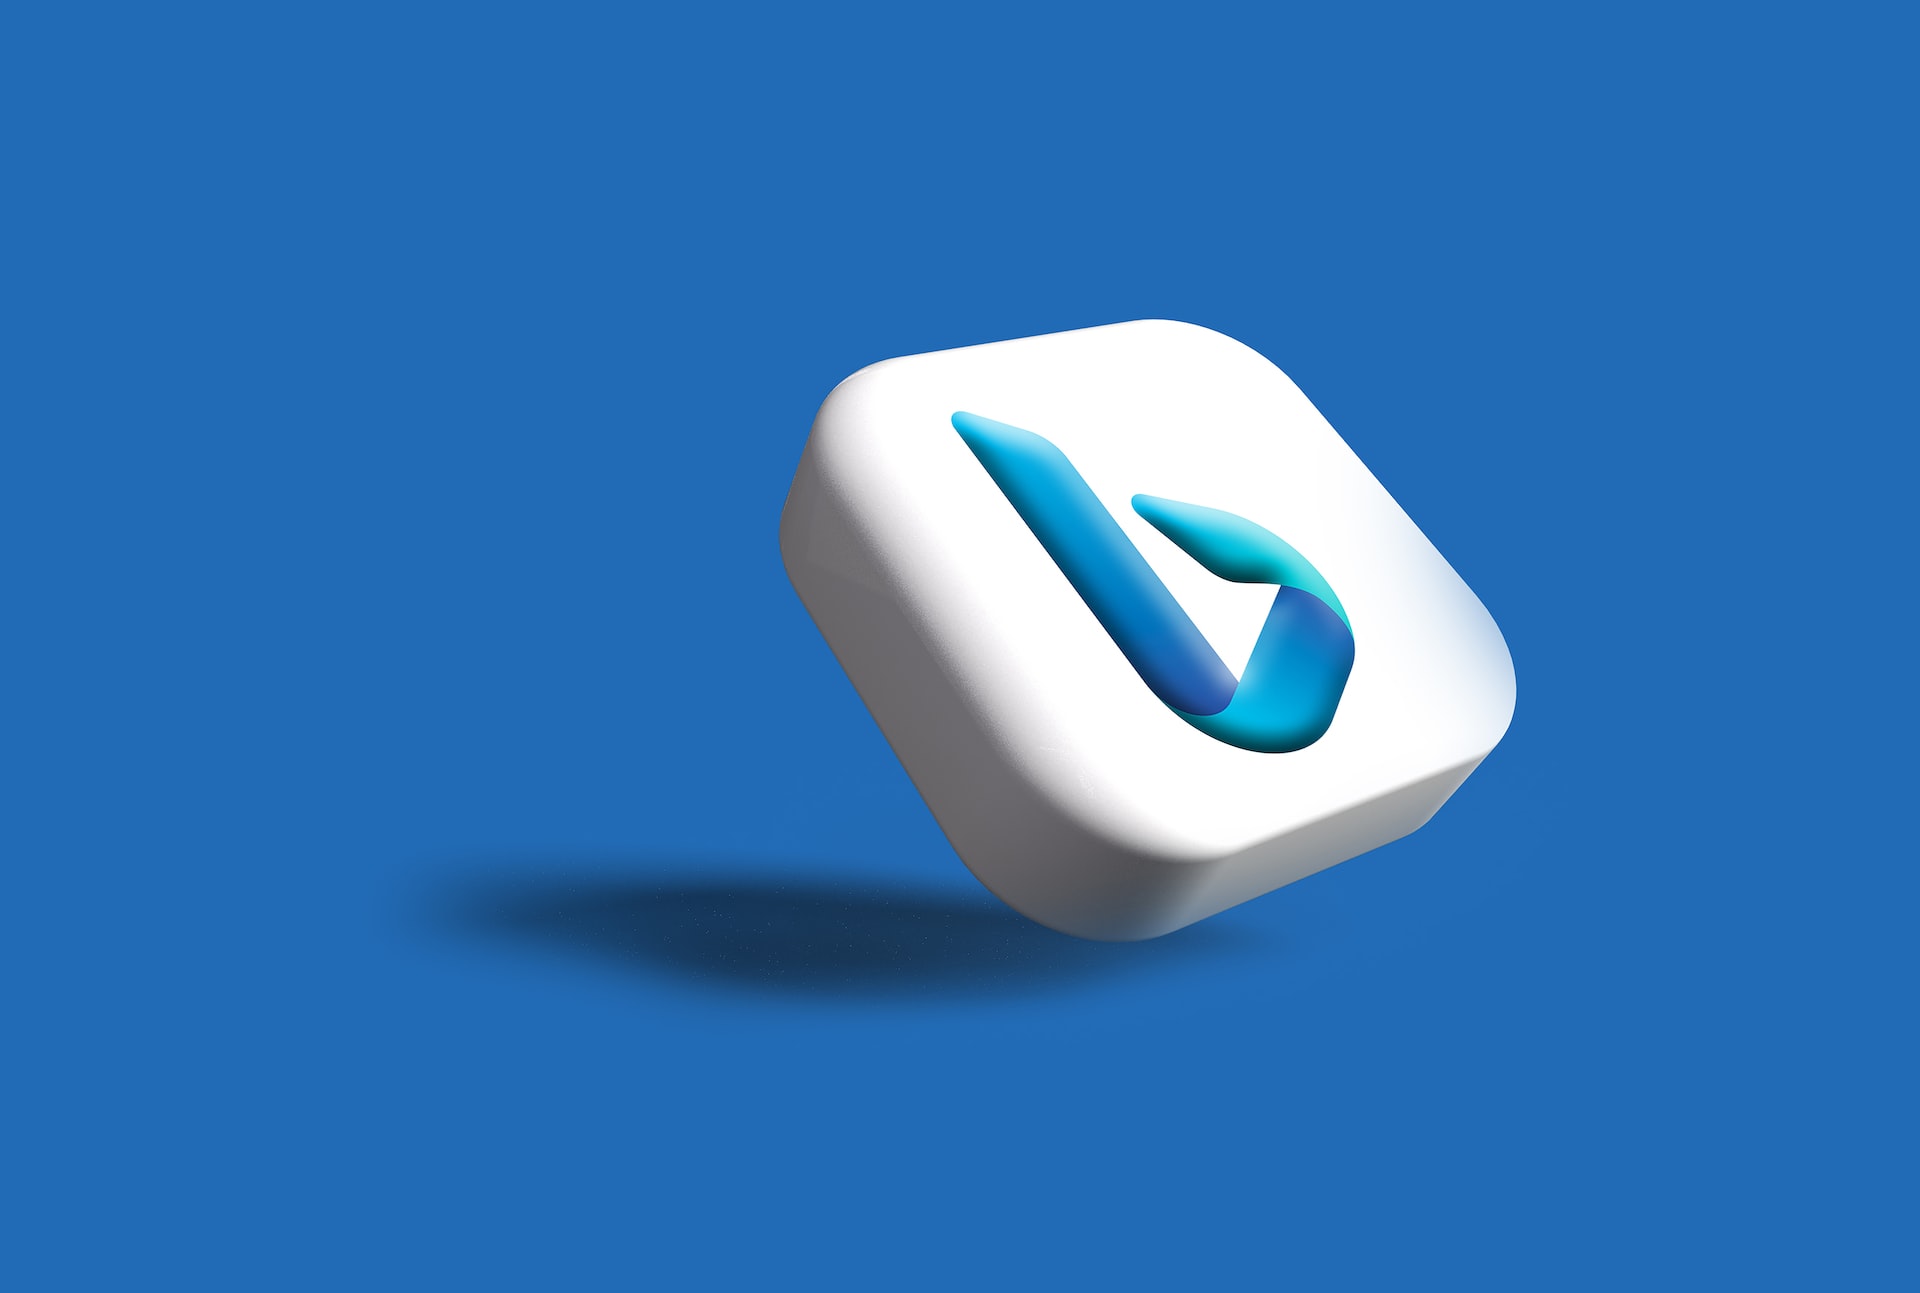 New Bing logo on floating icon